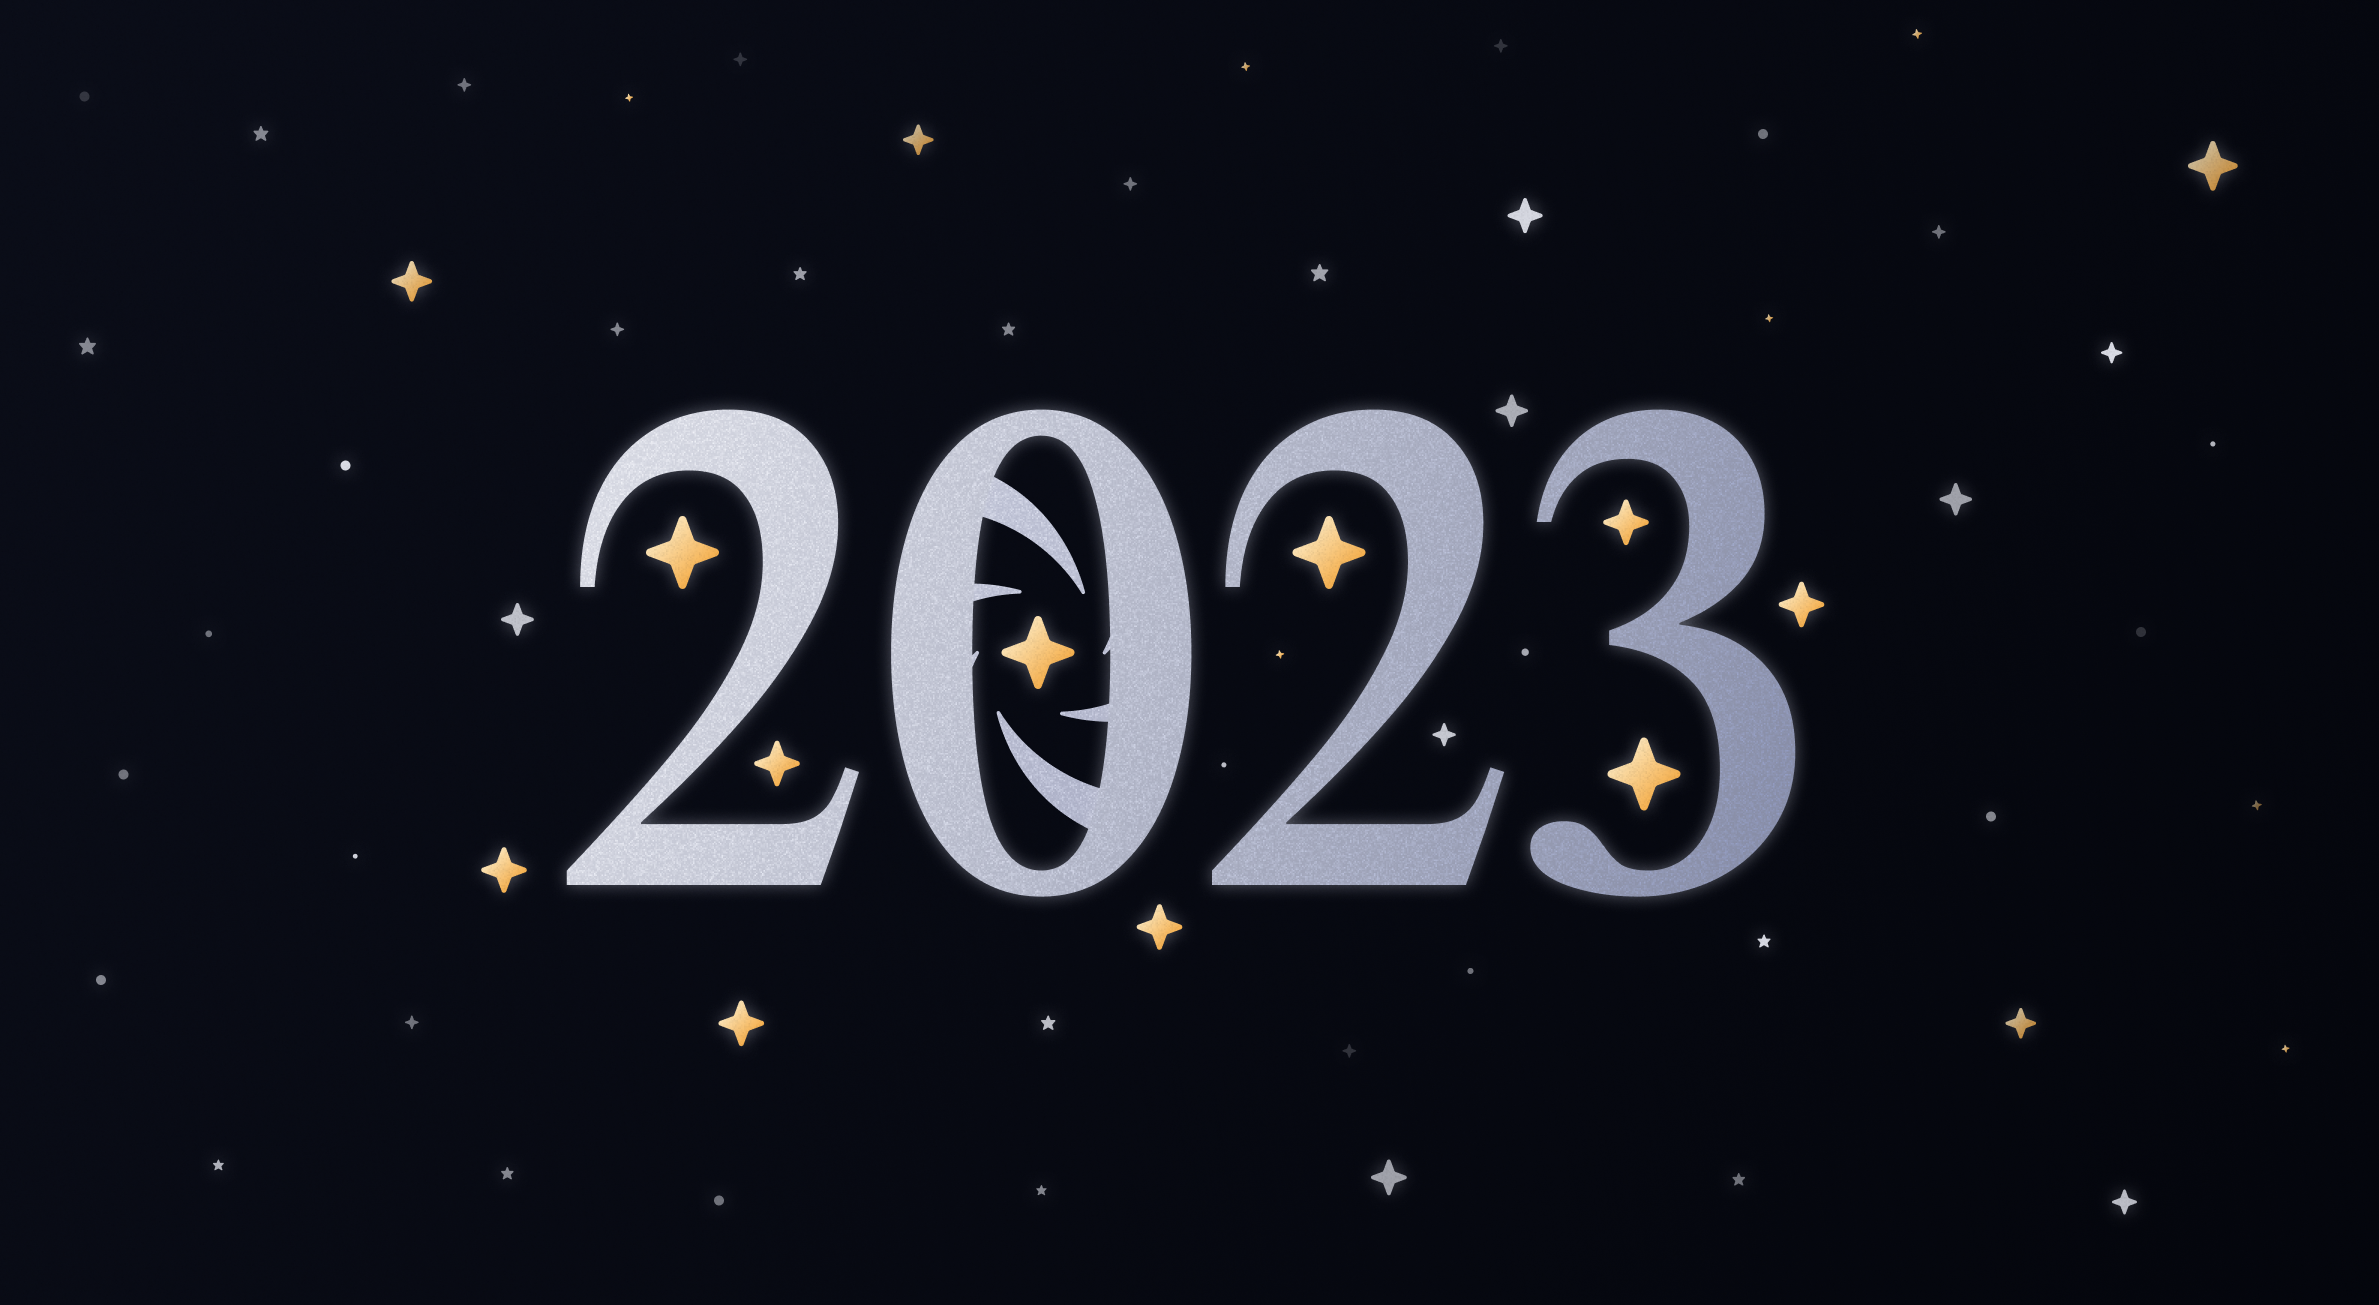 Quest Portal updates in 2023.